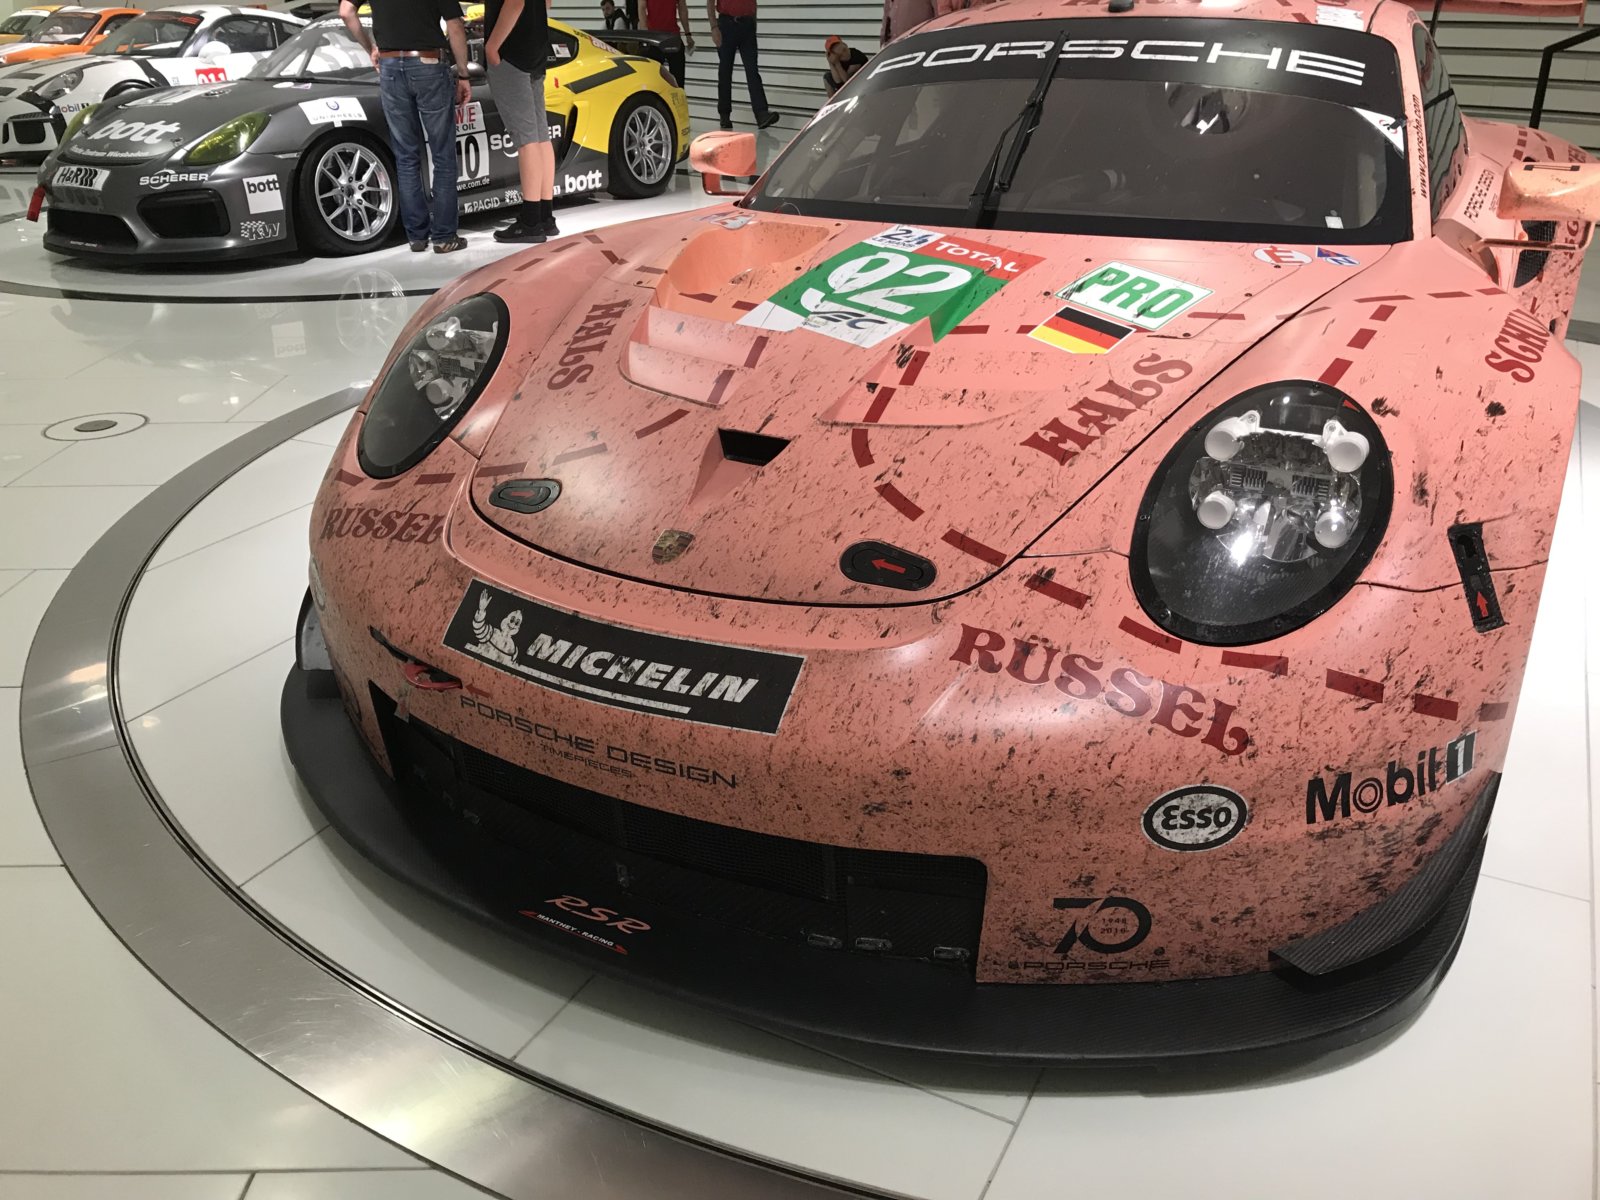 07-28 Porsche Race Car 34